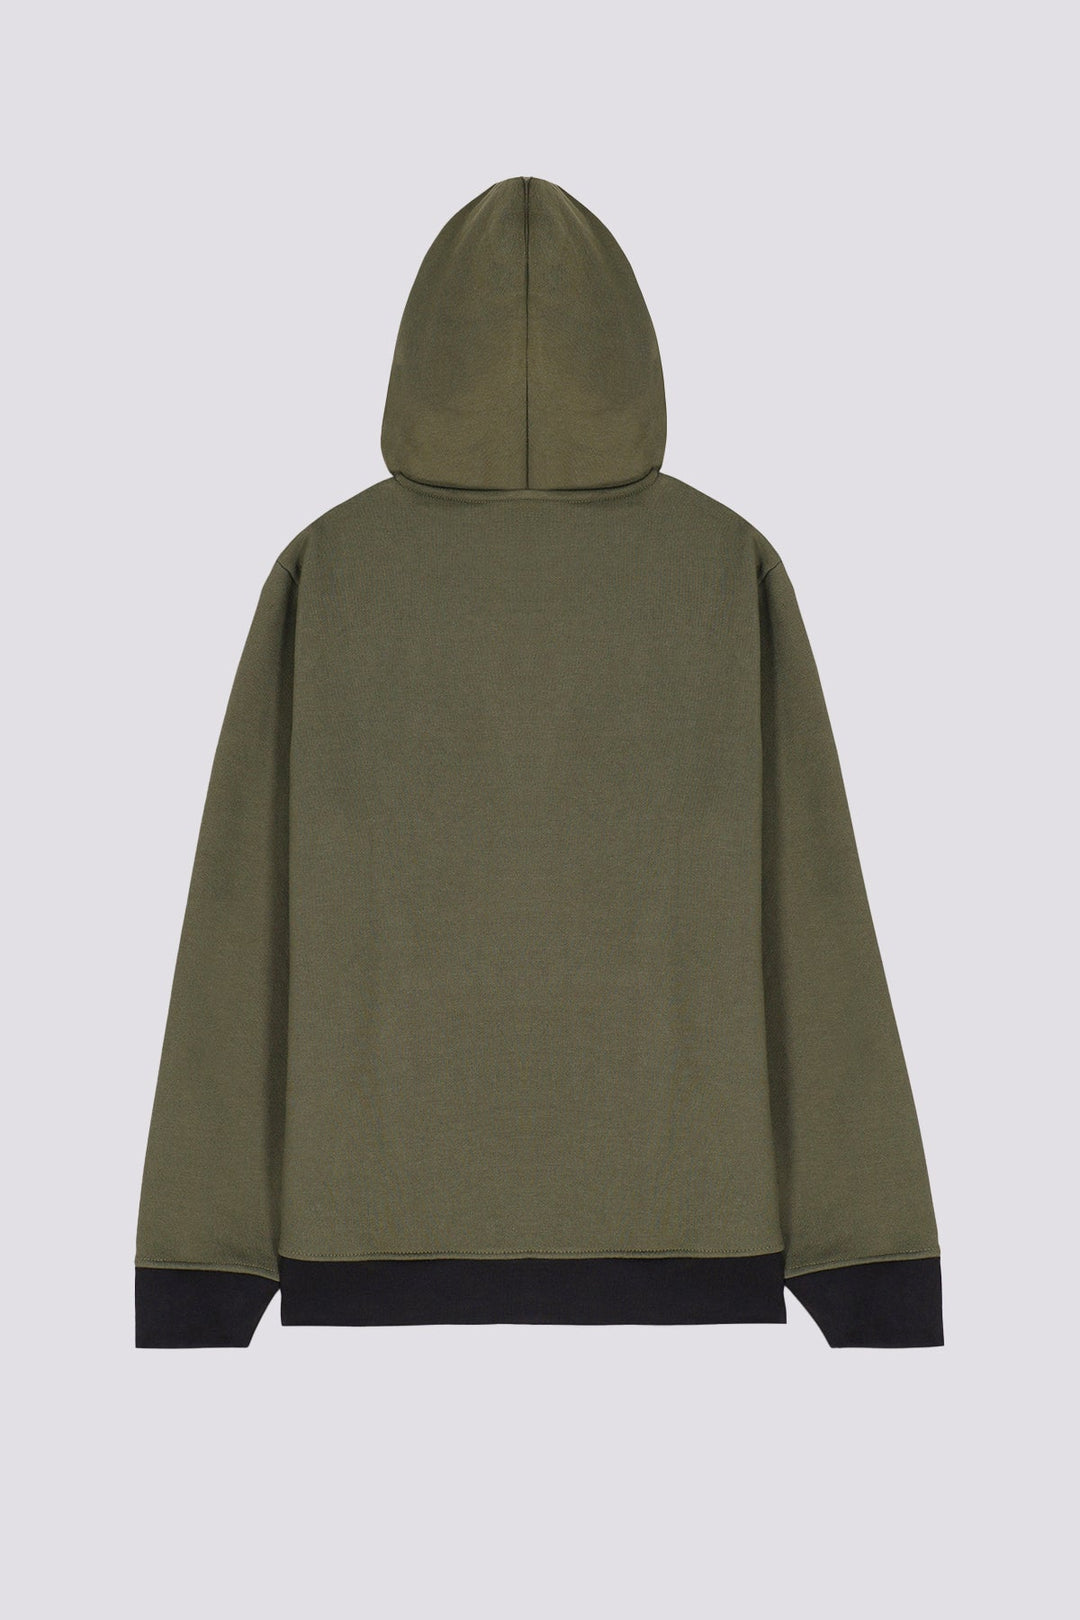 Army Green Fleece Zipper Hoodie - W23 - MH0069R